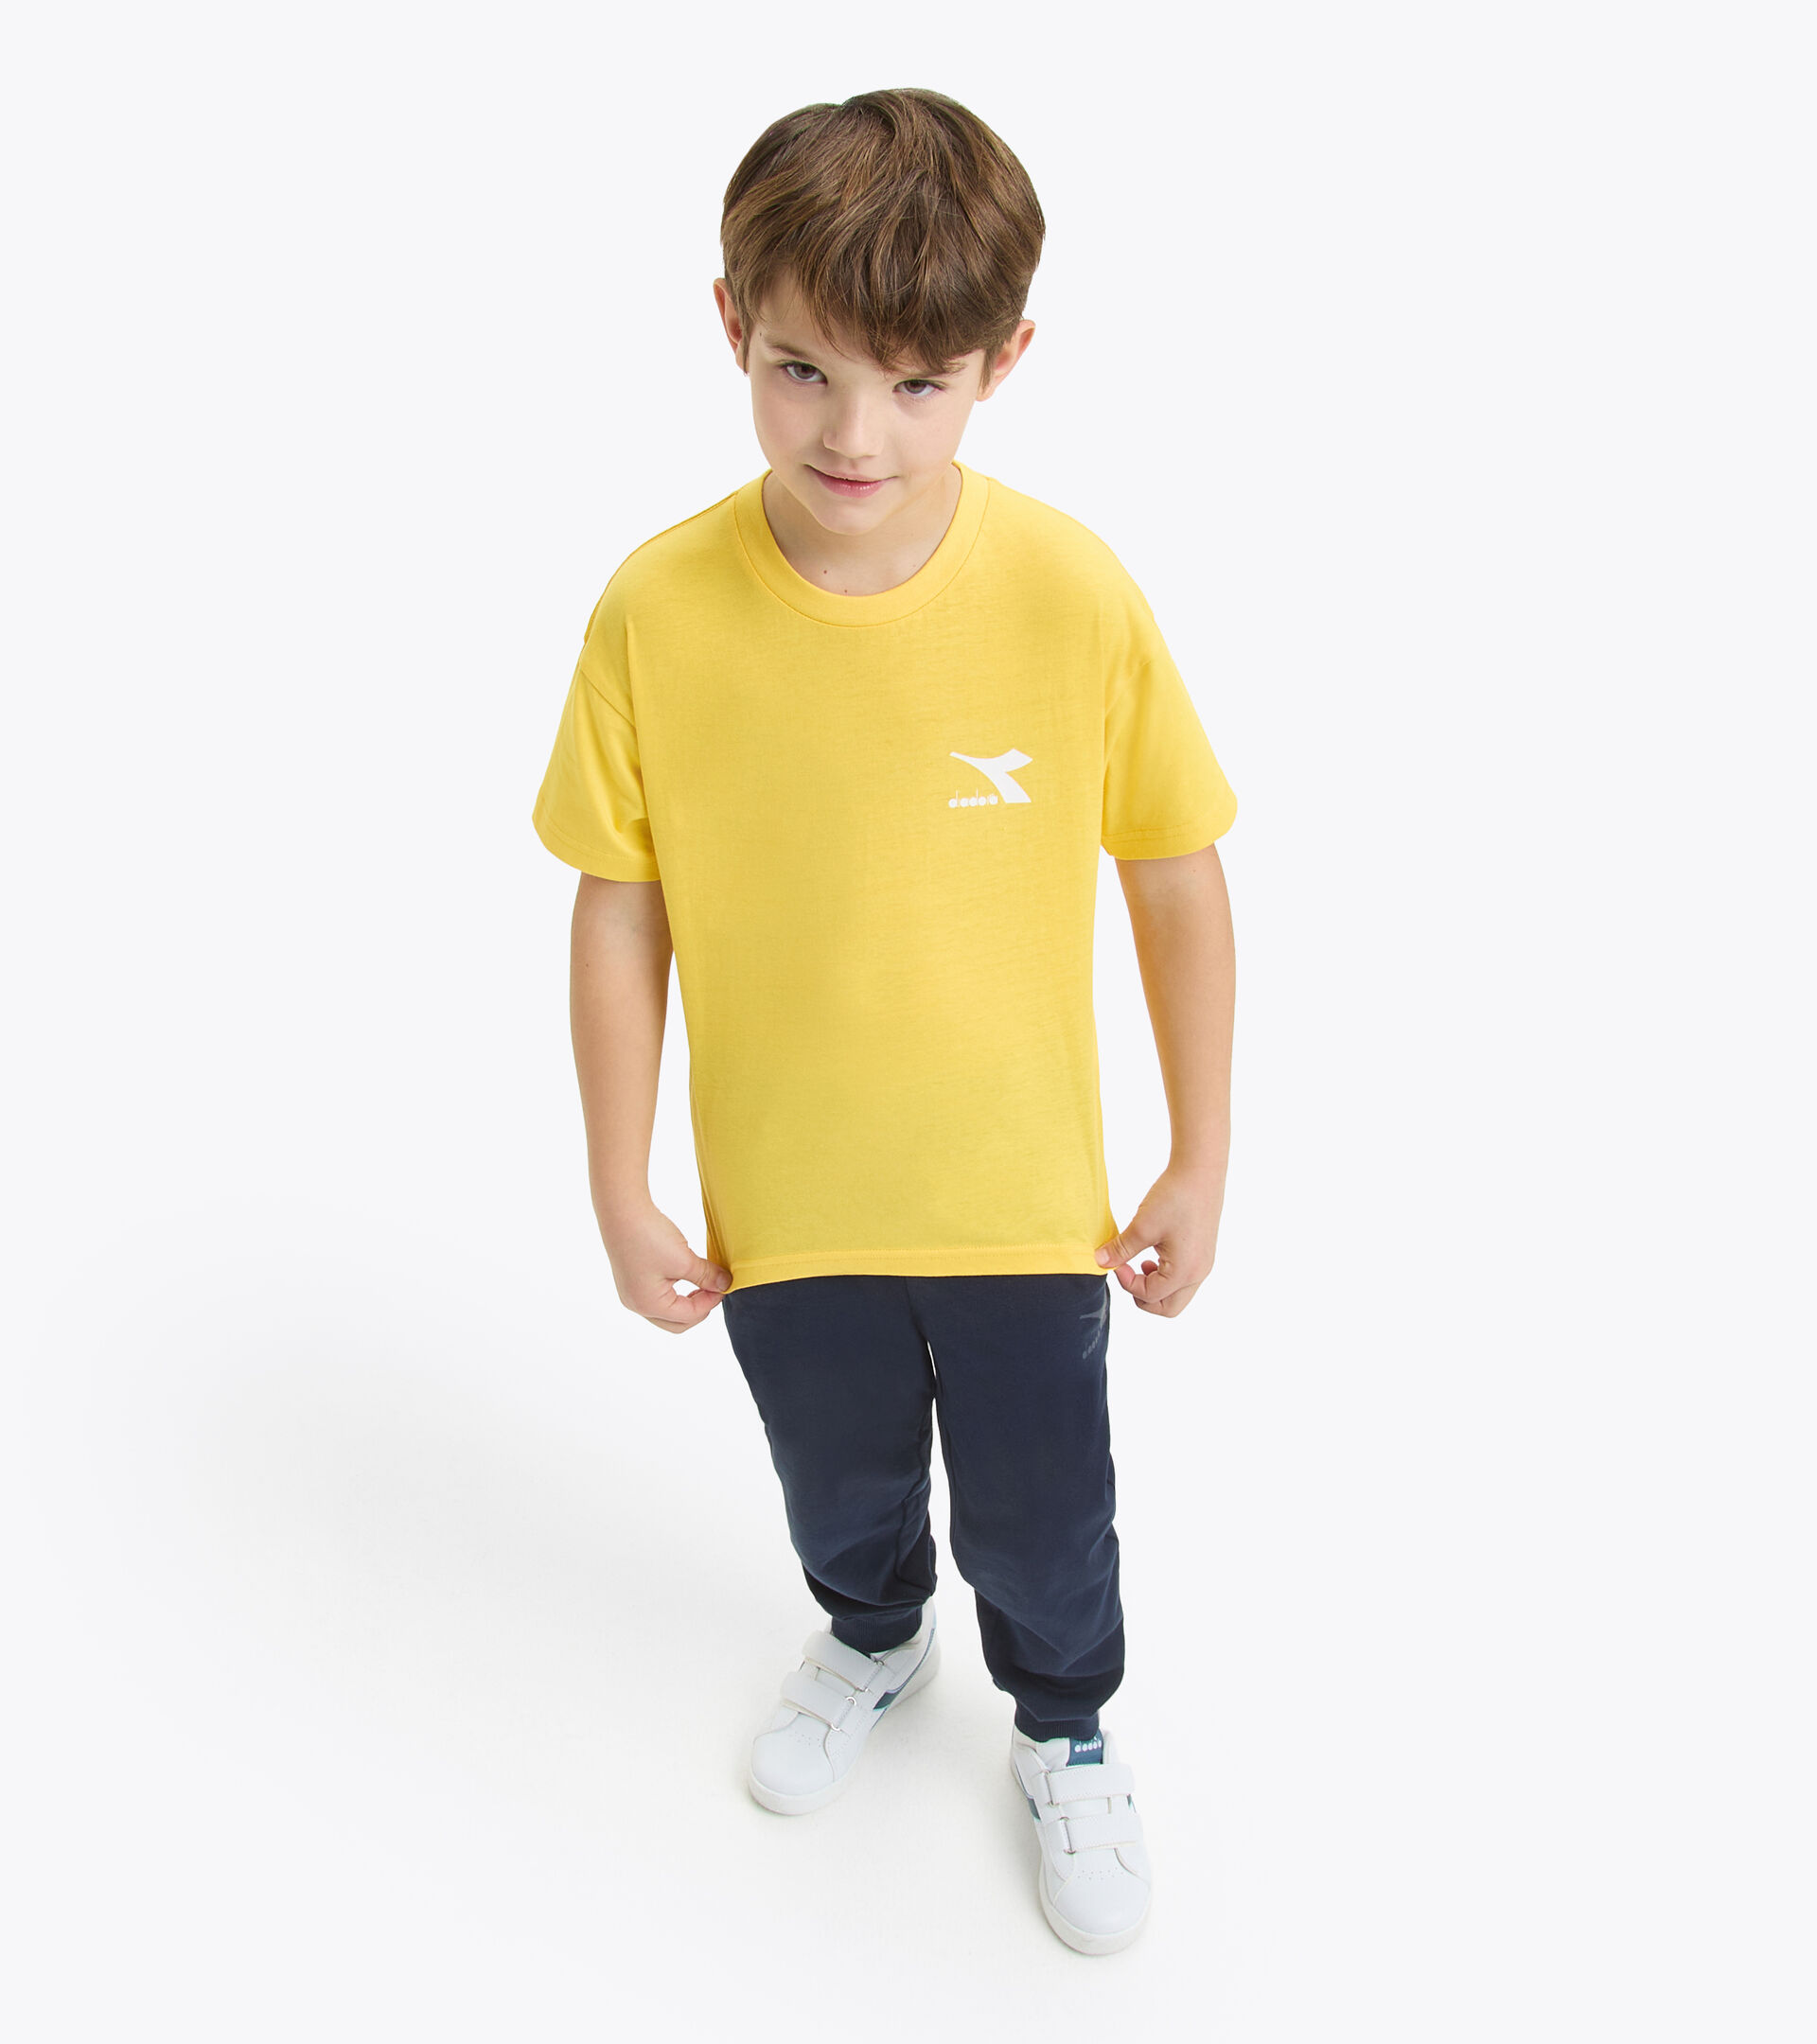 Camiseta de algodón - Niños y niñas
 JU.T-SHIRT SS SL AMARILLO ALAMO TEMBLON OR - Diadora